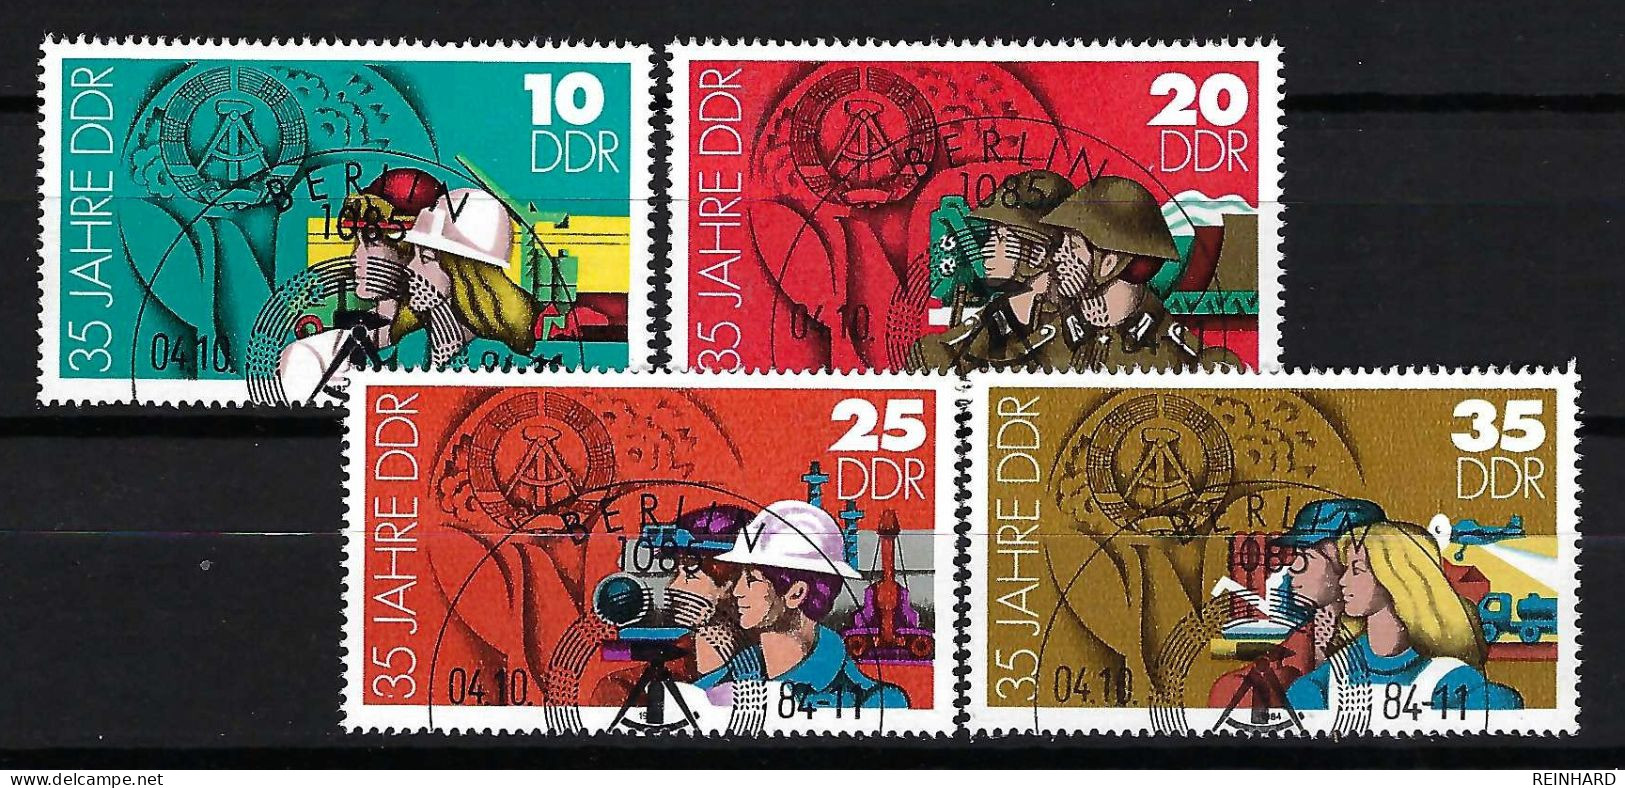 DDR Komplettsatz Mi-Nr. 2898 - 2901 - 35 Jahre DDR Gestempelt - Siehe Bild - Used Stamps